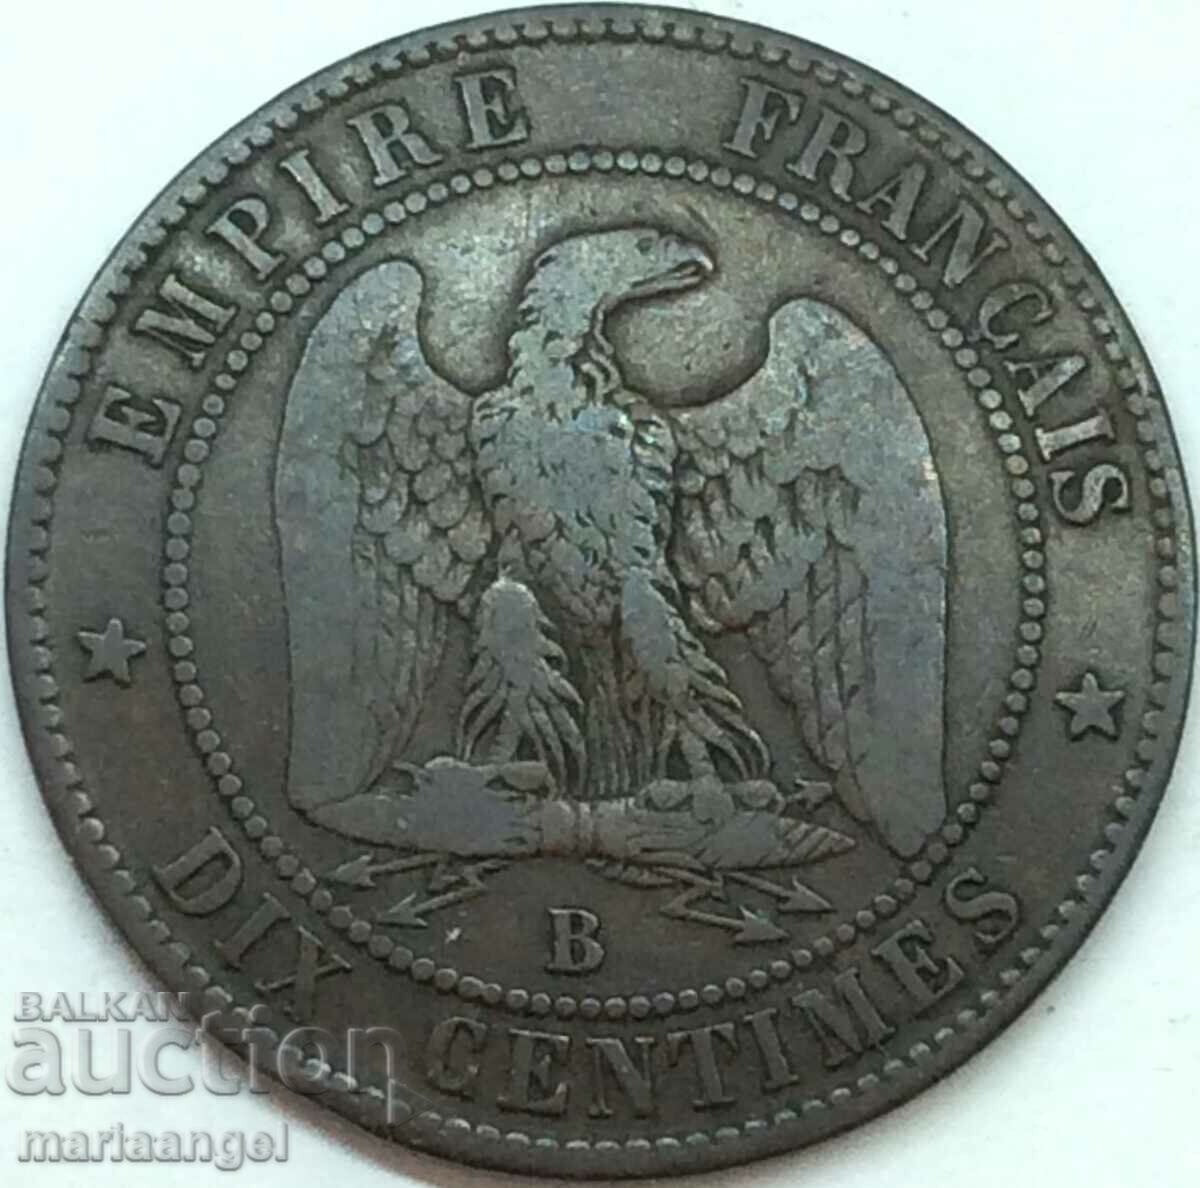 10 centimes 1856 France Napoleon III bronze